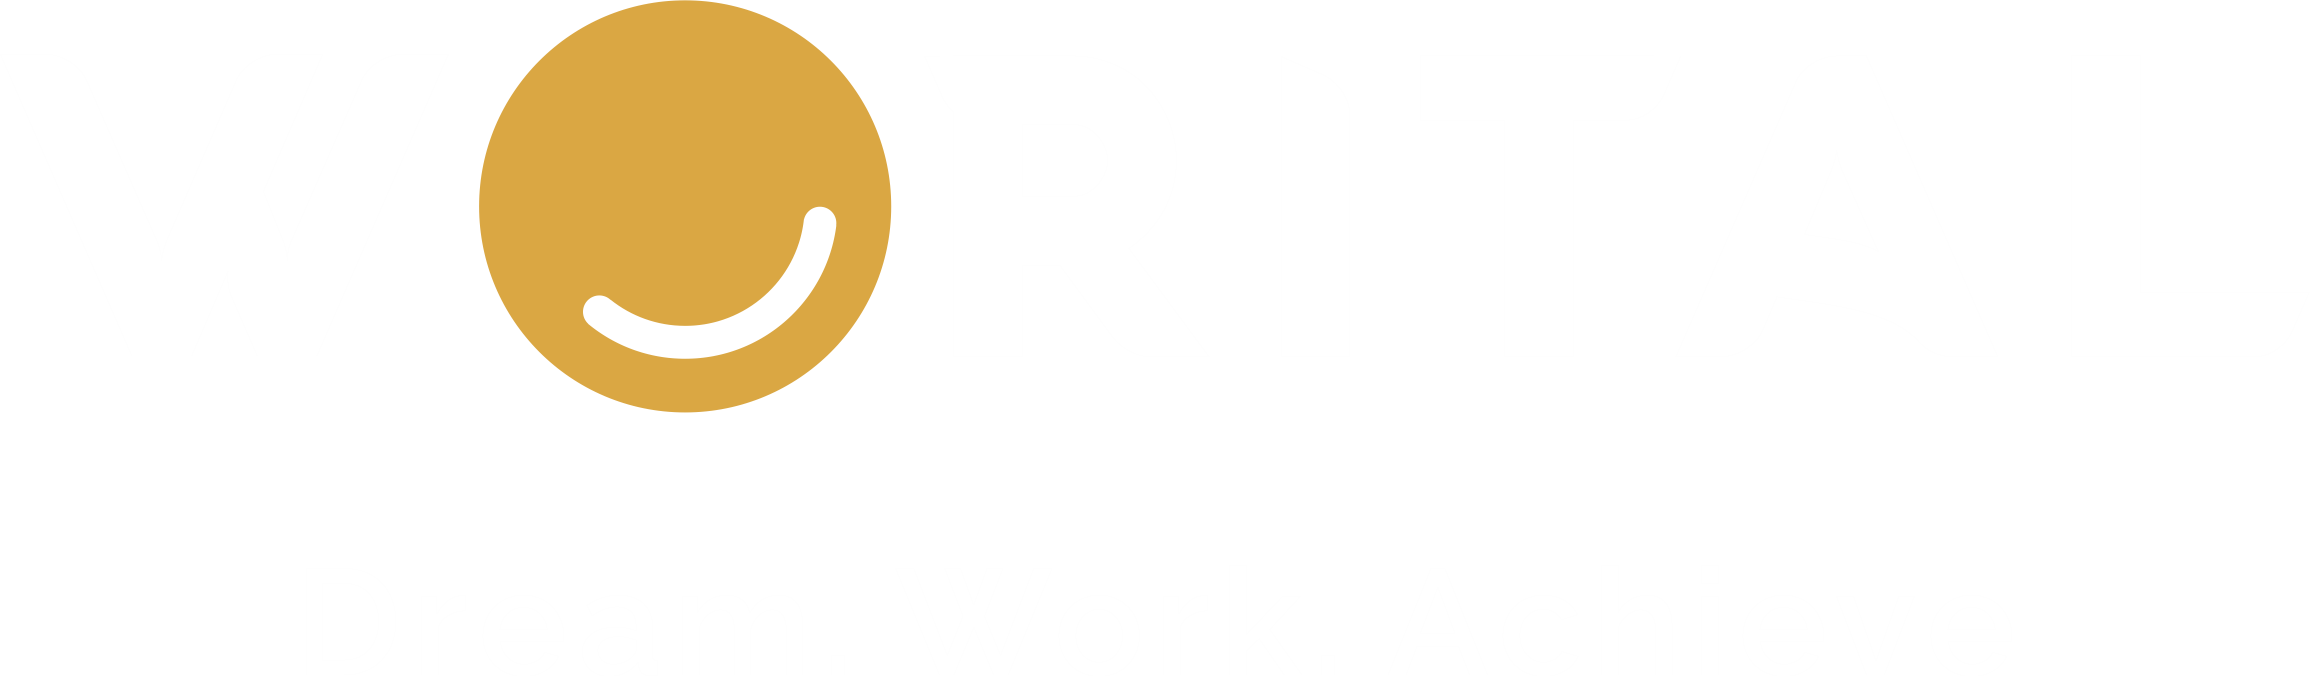 worital.com